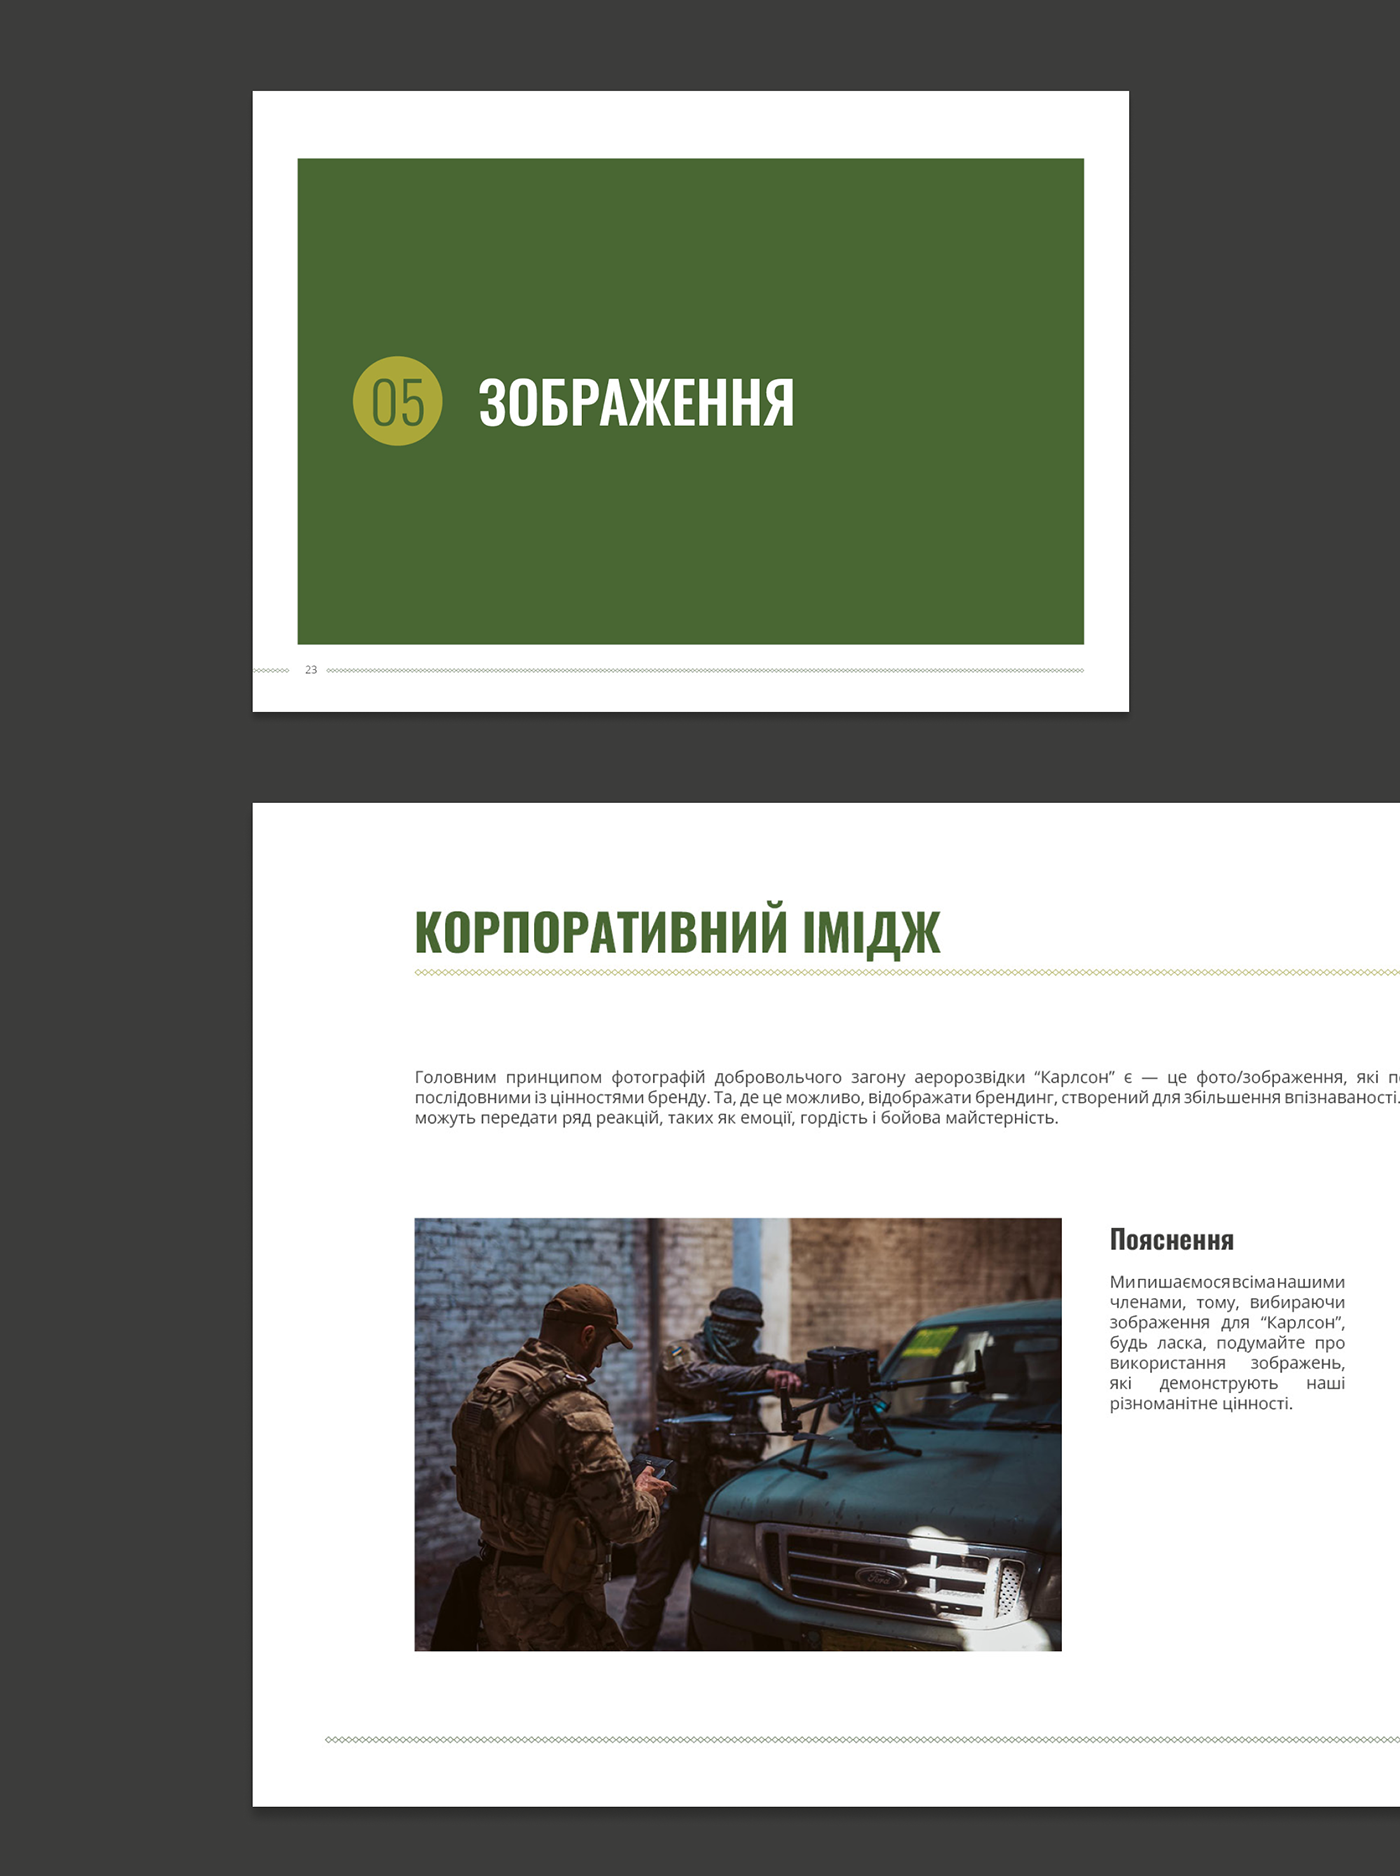 Brandguidelines brandguide ukraine guidelines Corporate Identity brandbook logo guide aerial reconnaissance defense of Ukraine identity troops